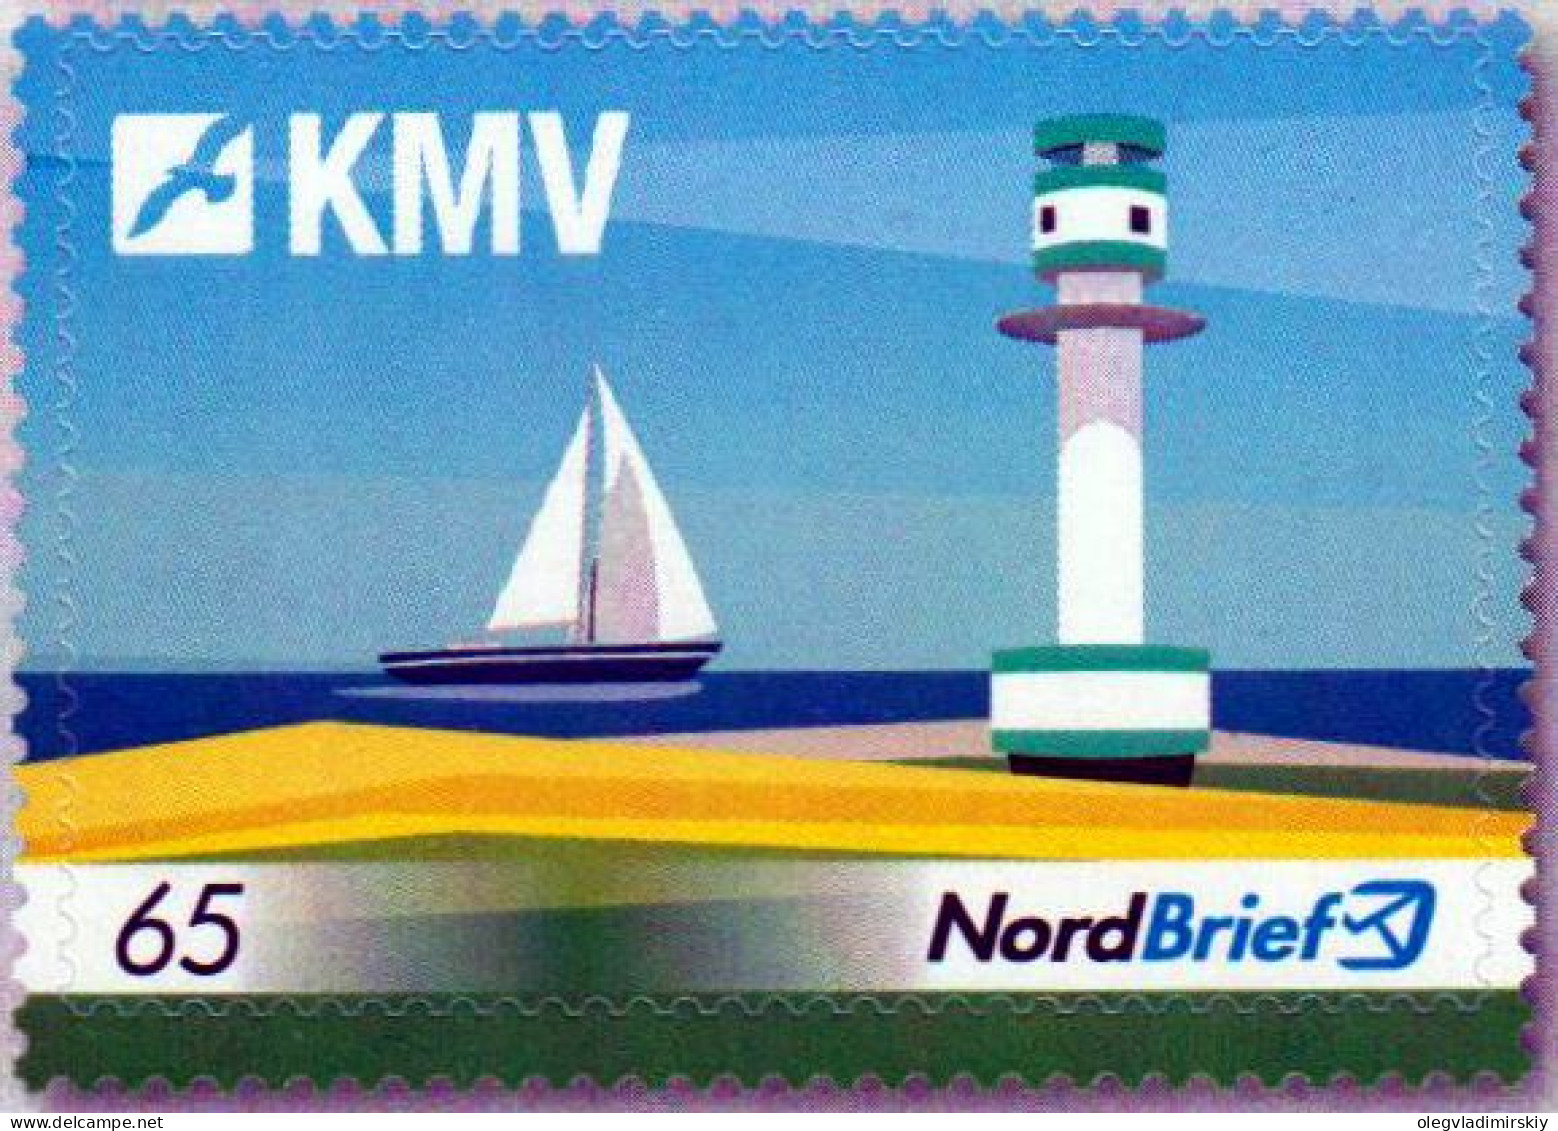 Germany Deutschland Allemagne 2017 Kiel Magazine Publisher Lighthouse Sailship NordBrief Stamp MNH - Fari